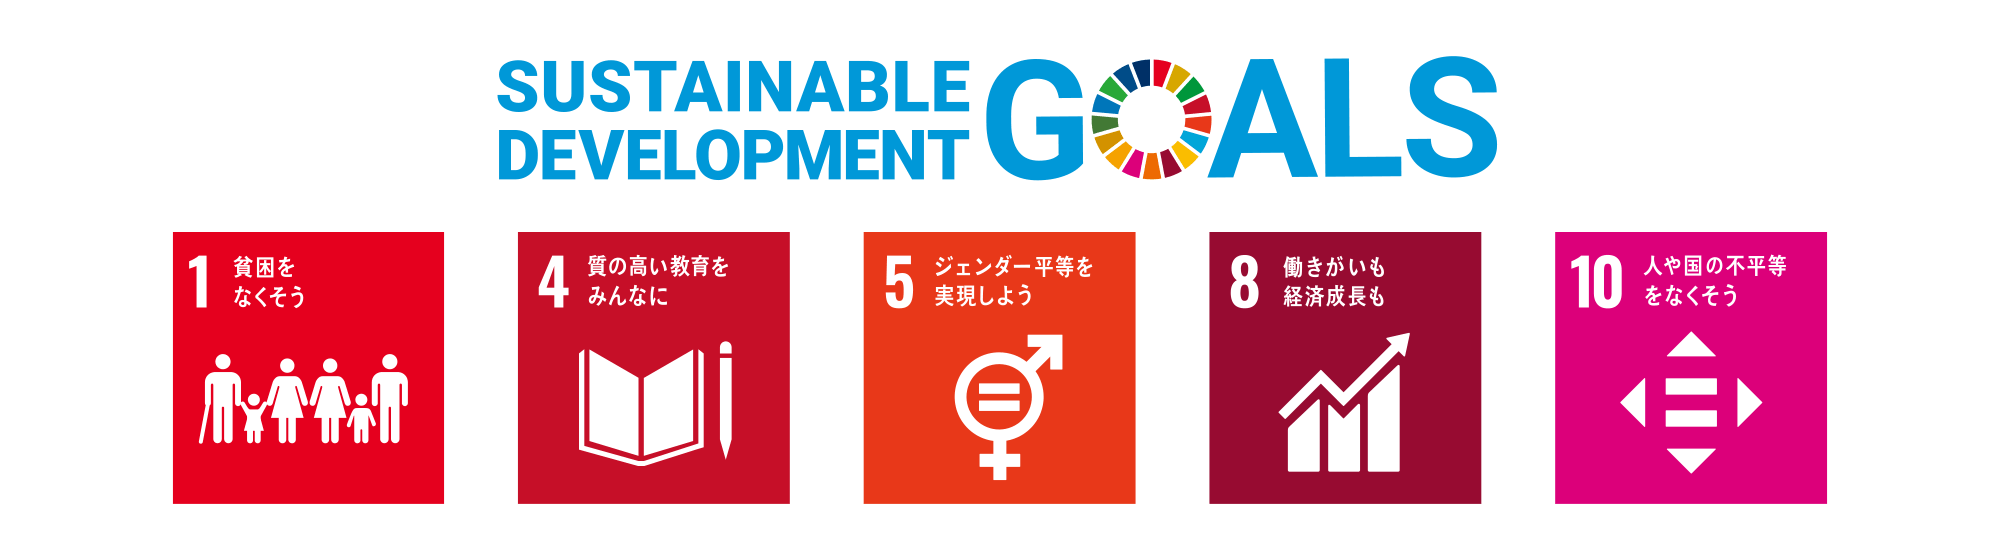 SDGsで取り組まれている17の大きな目標のうち、下記の５項目に連動したプロジェクト